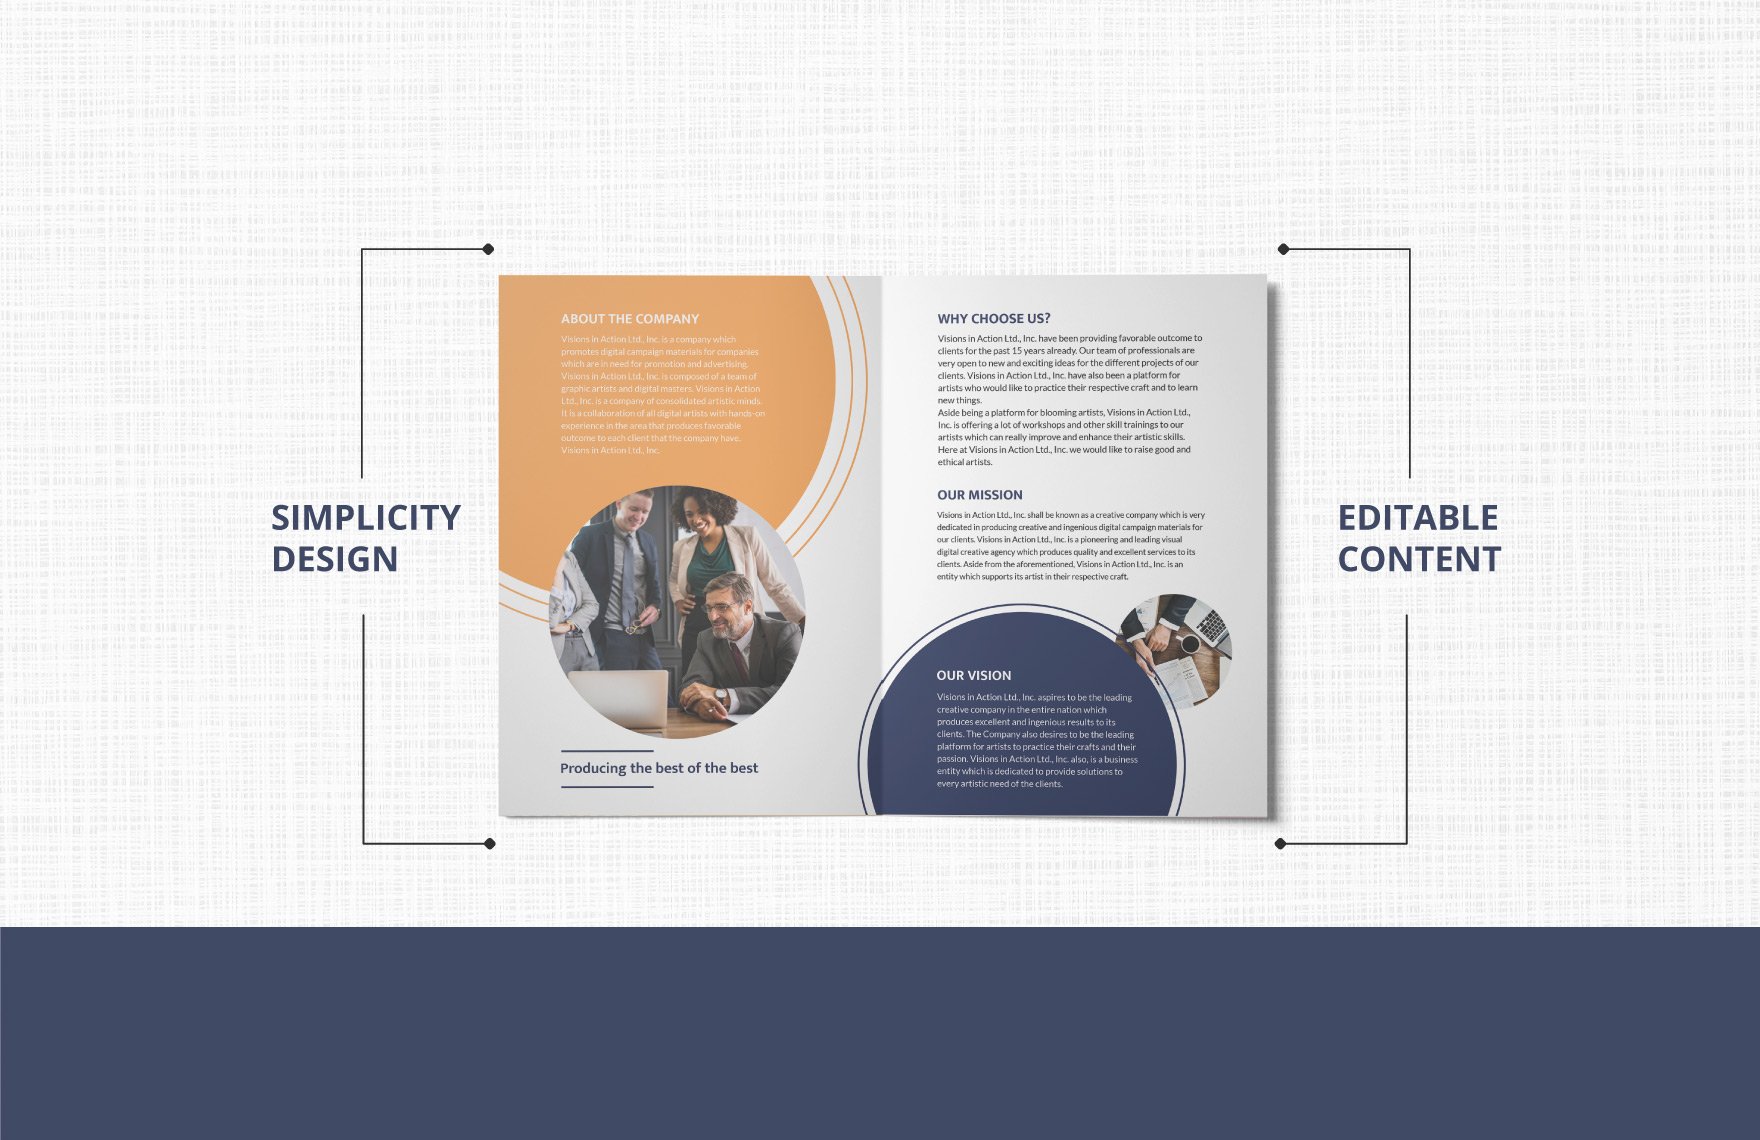 Proposal Bi-Fold Brochure Template